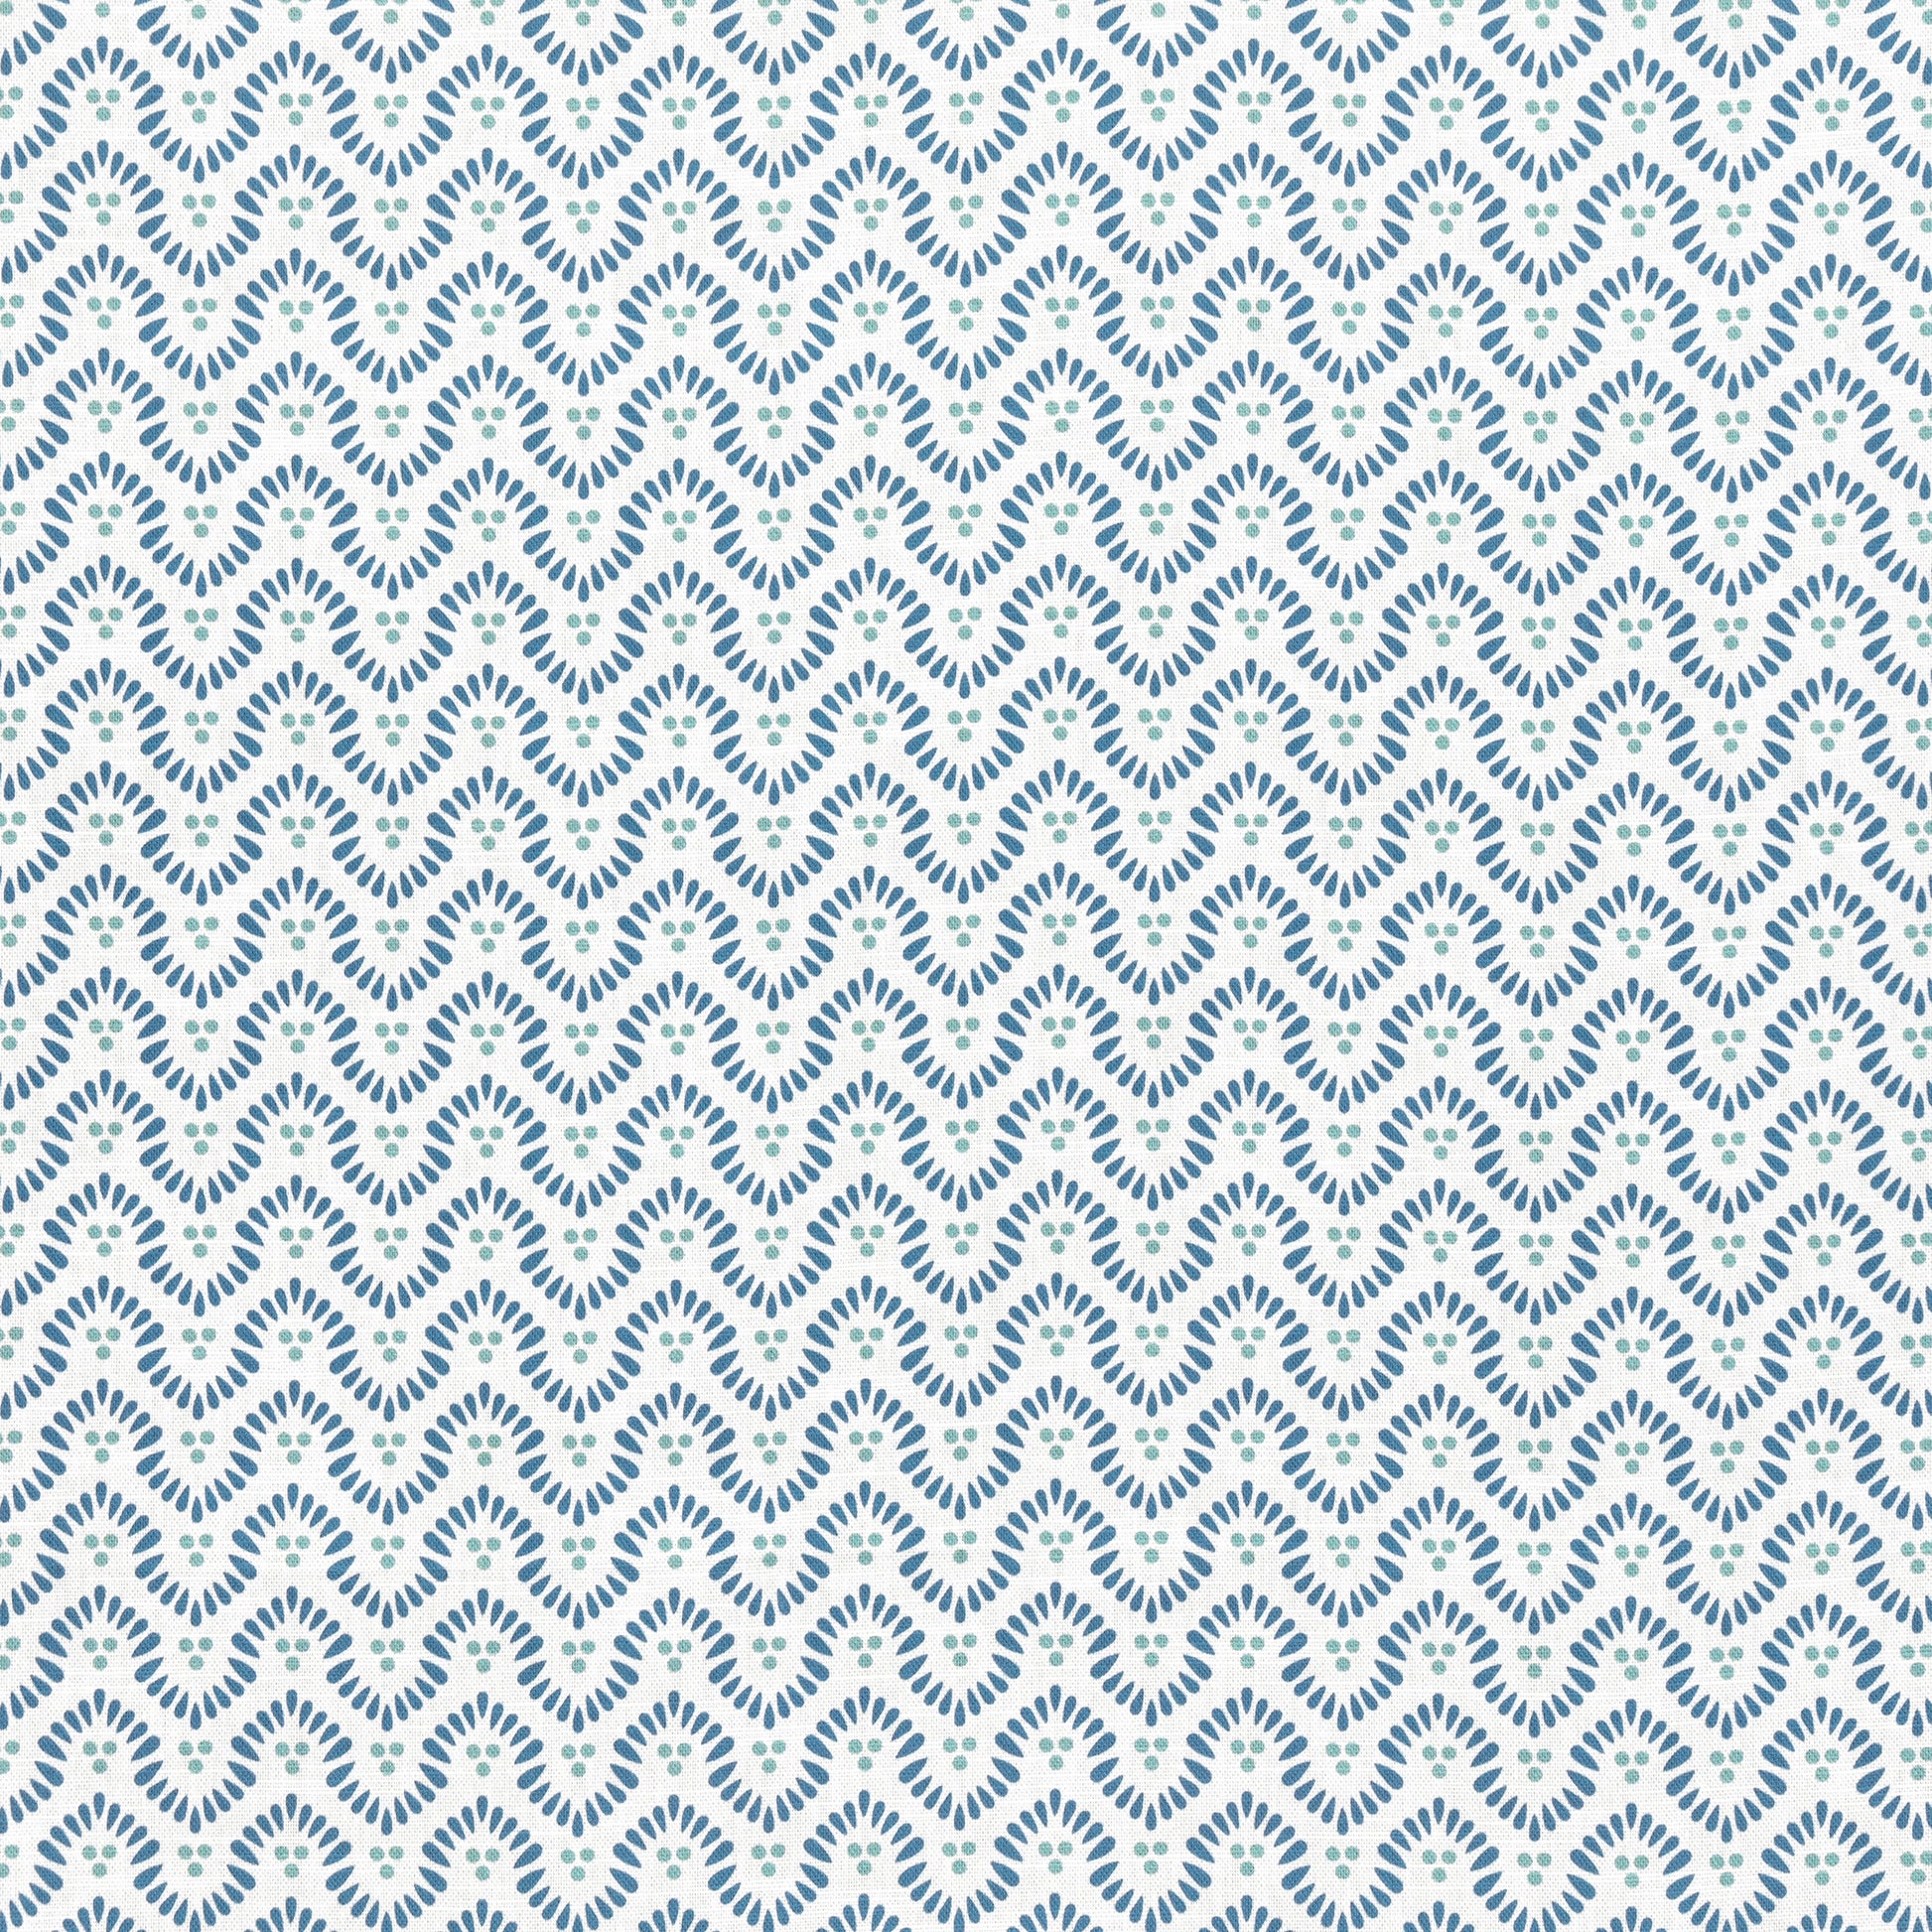 Purchase  Ann French Fabric Item# AF23146  pattern name  Wynford